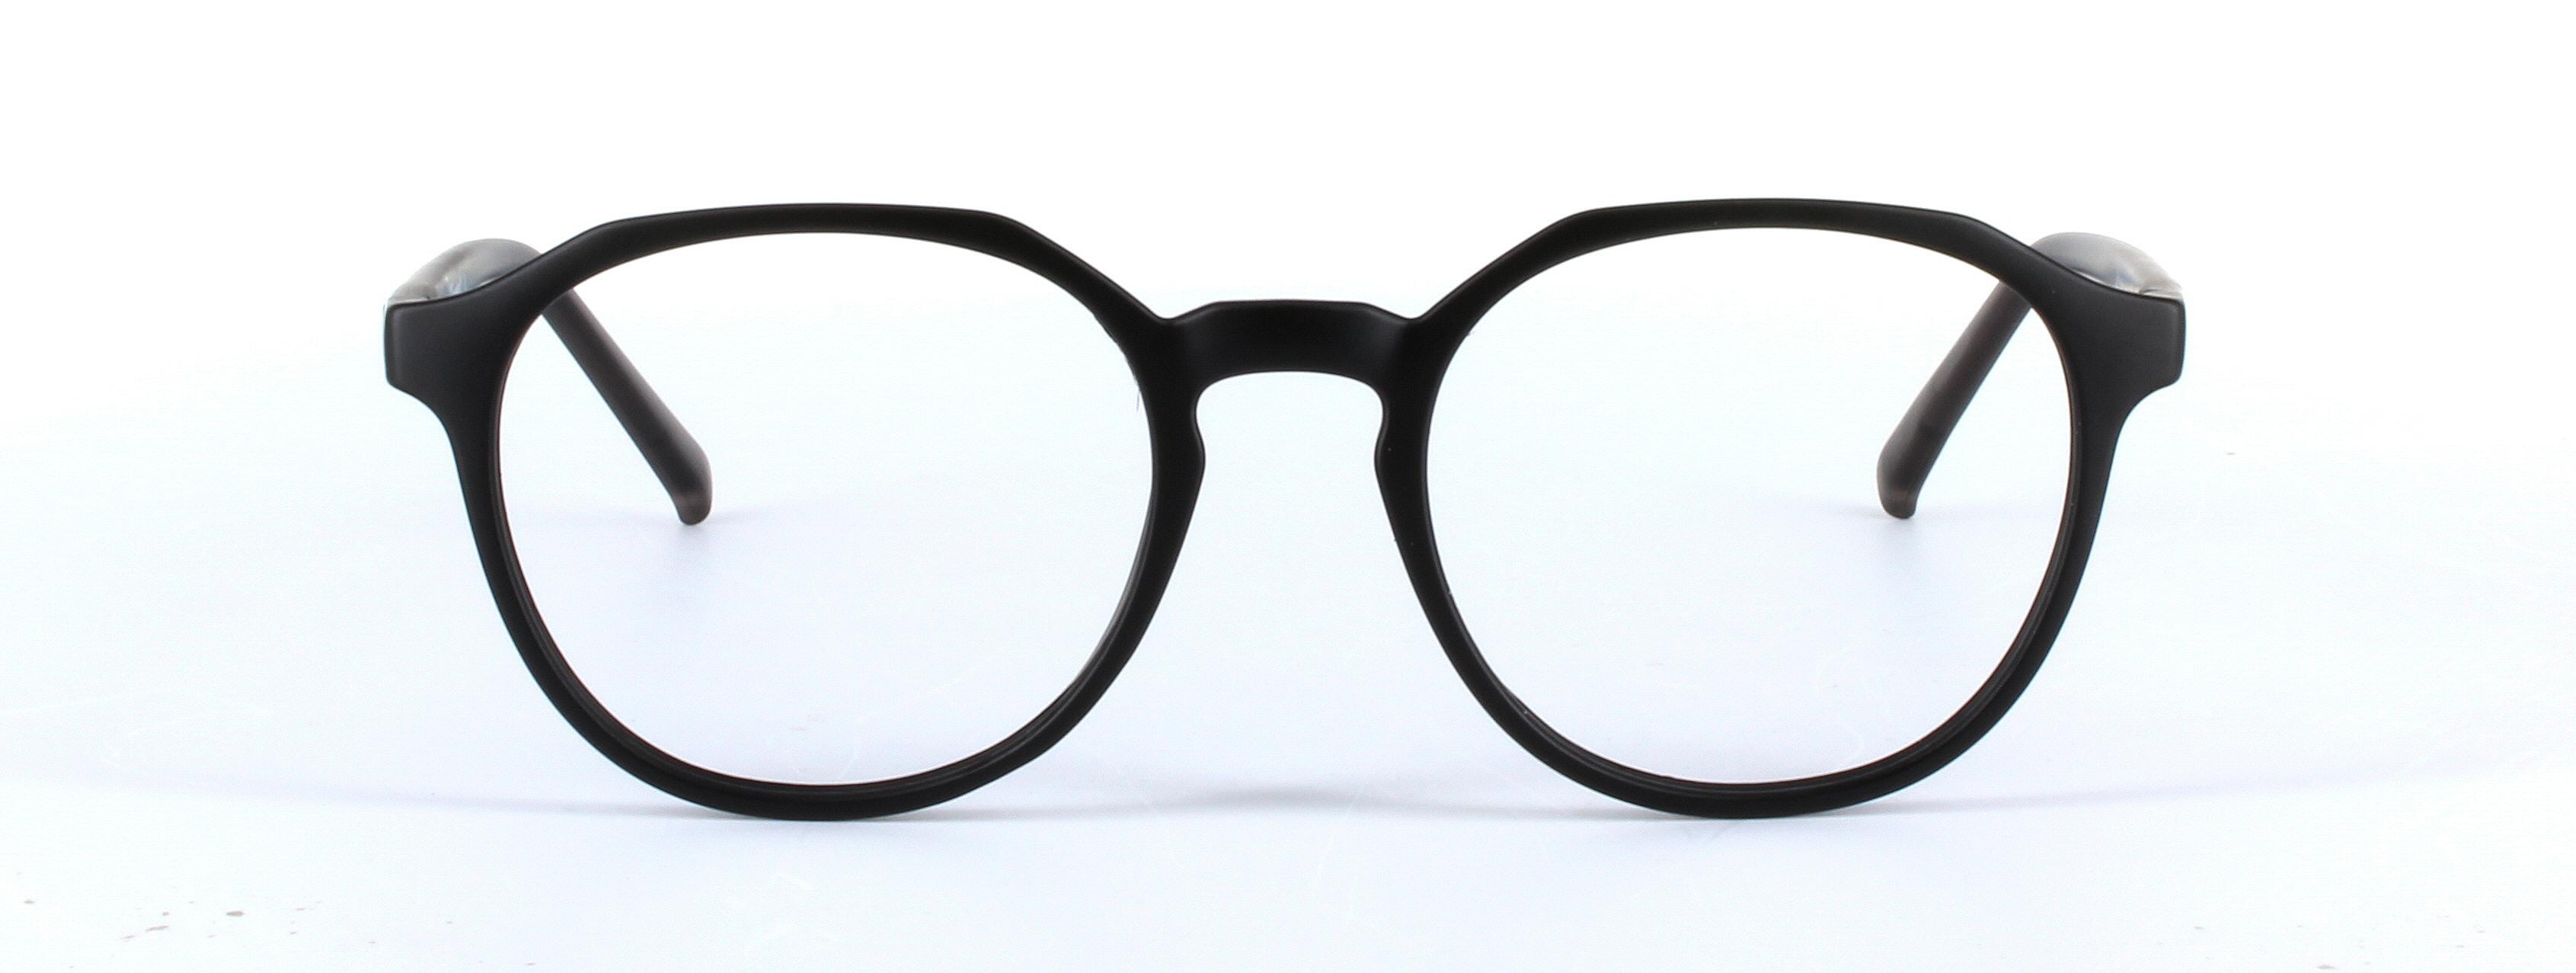 Jango Black Full Rim Round Plastic Glasses - Image View 5